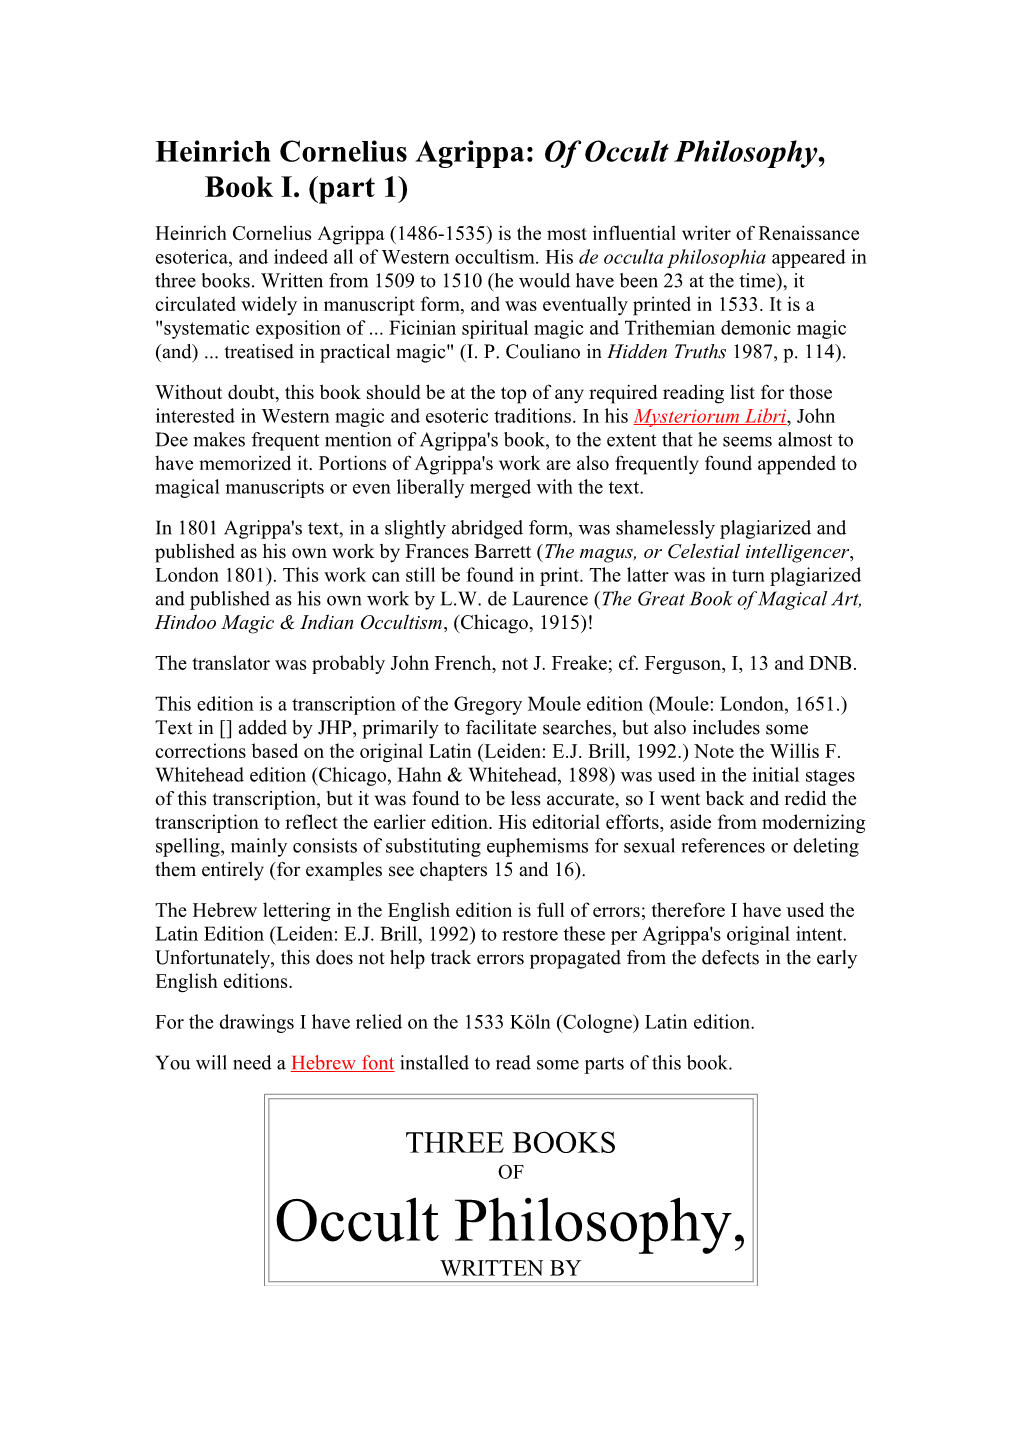 Heinrich Cornelius Agrippa: of Occult Philosophy, Book I